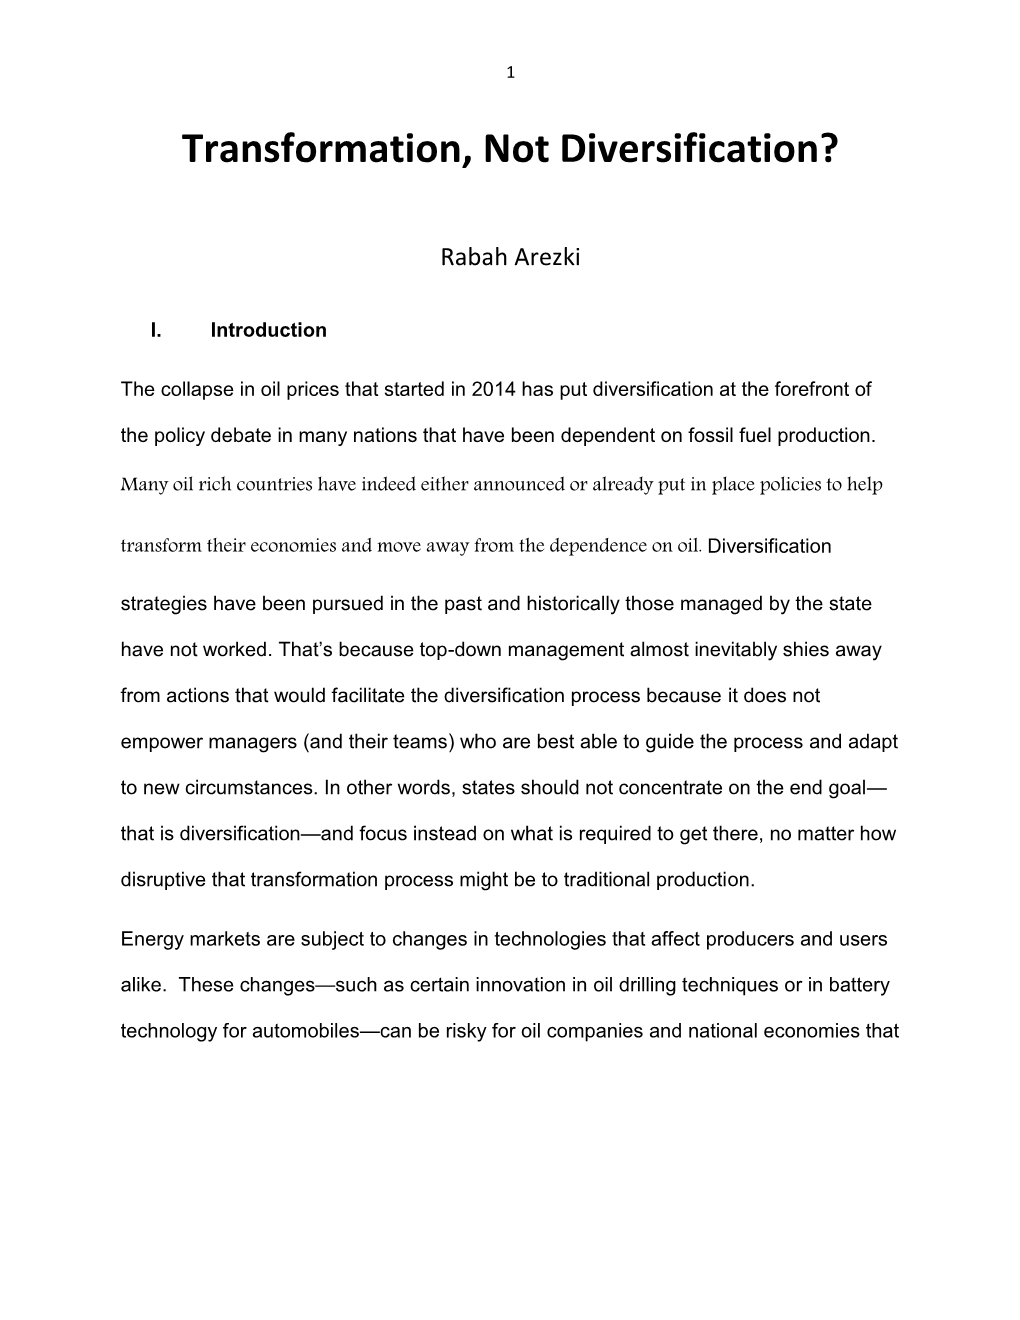 Transformation, Not Diversification?